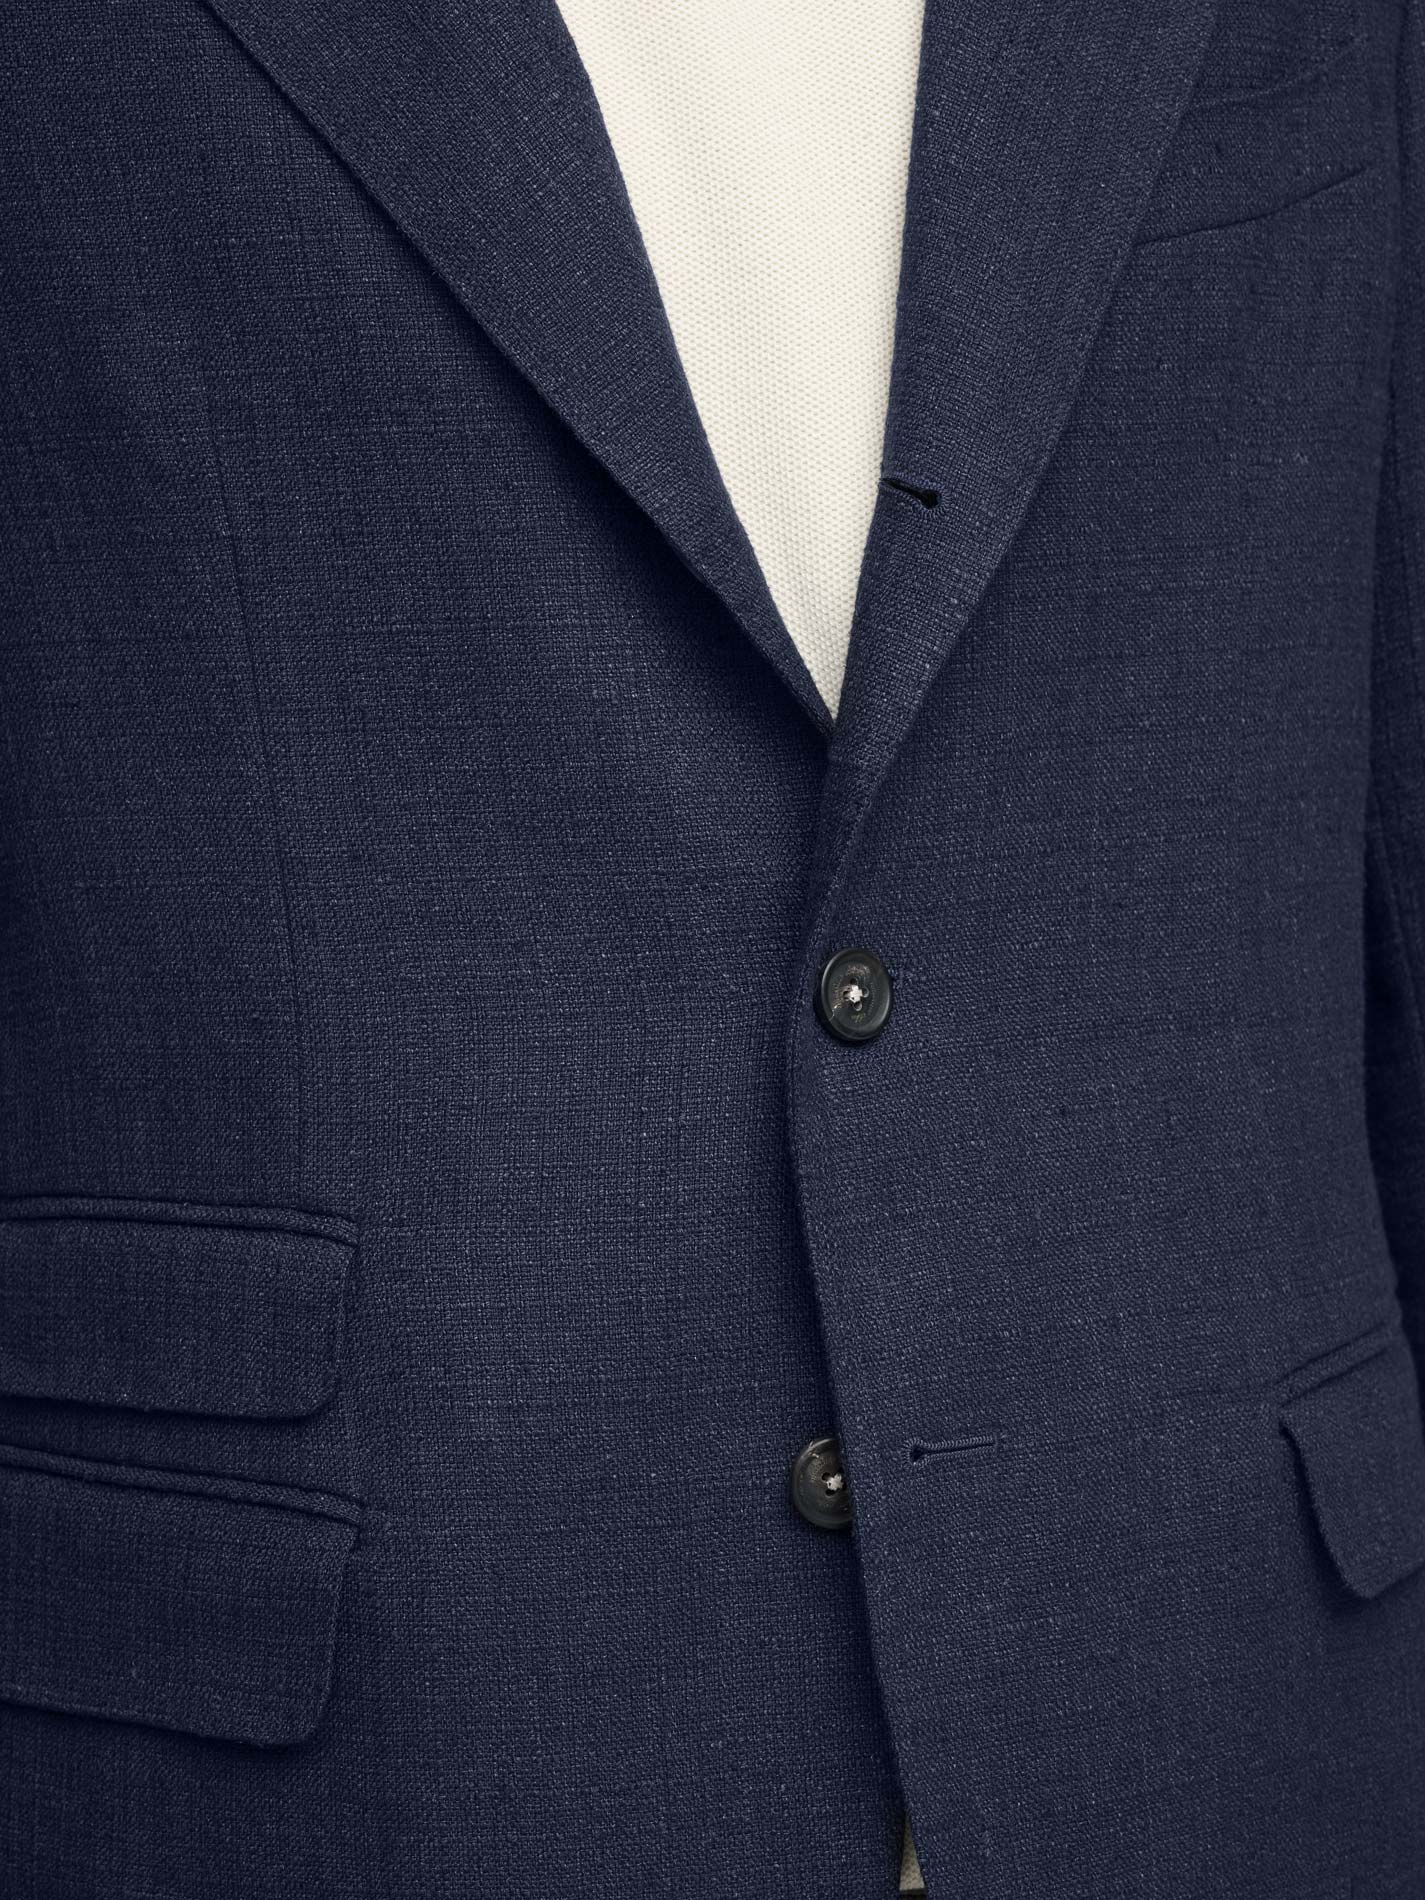 Catch2 Linen Cotton Silk Single-Breasted Jacket, Blu